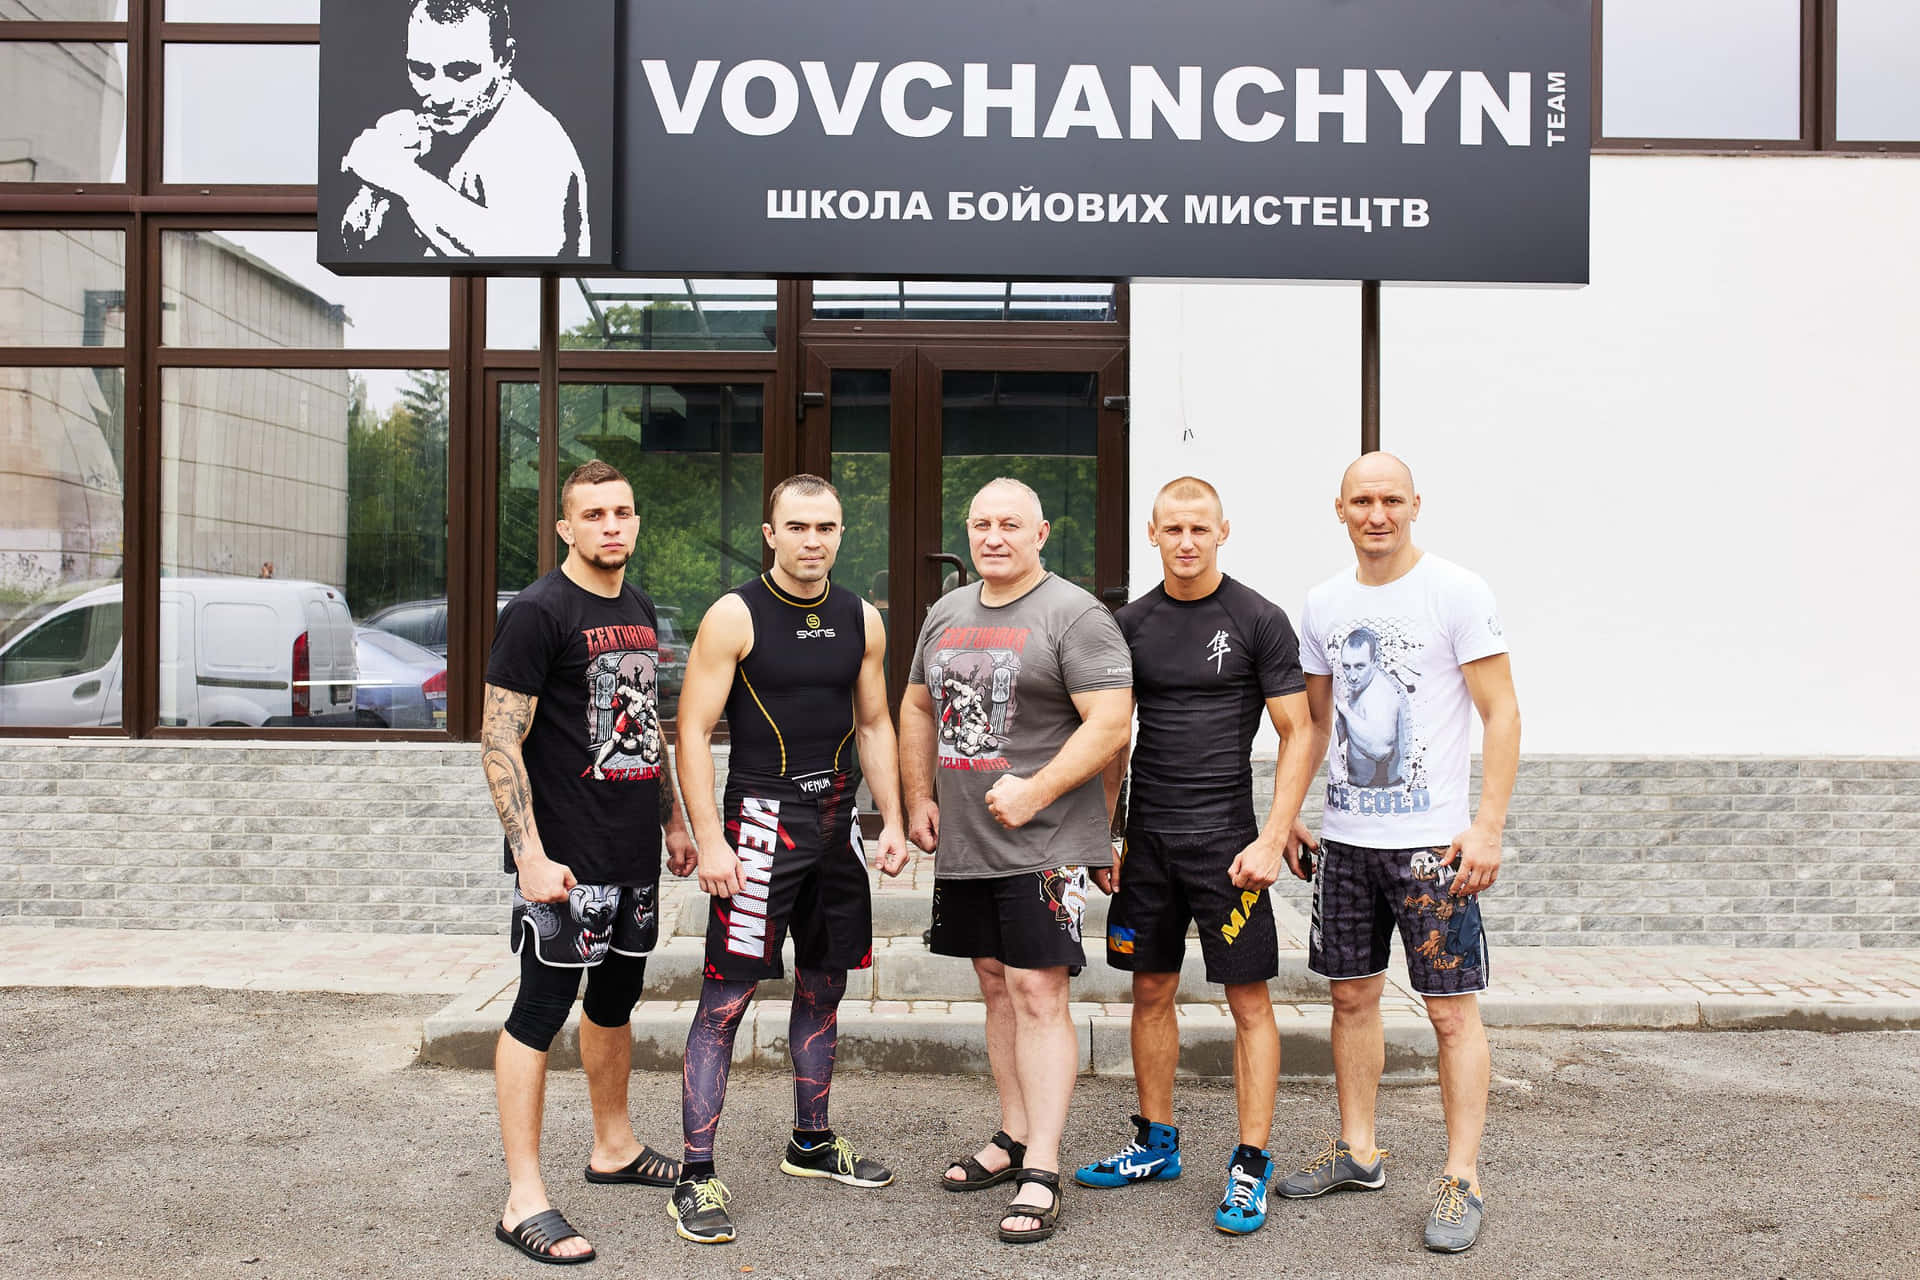 Igor Vovchanchyn In Front Of His Gym Wallpaper